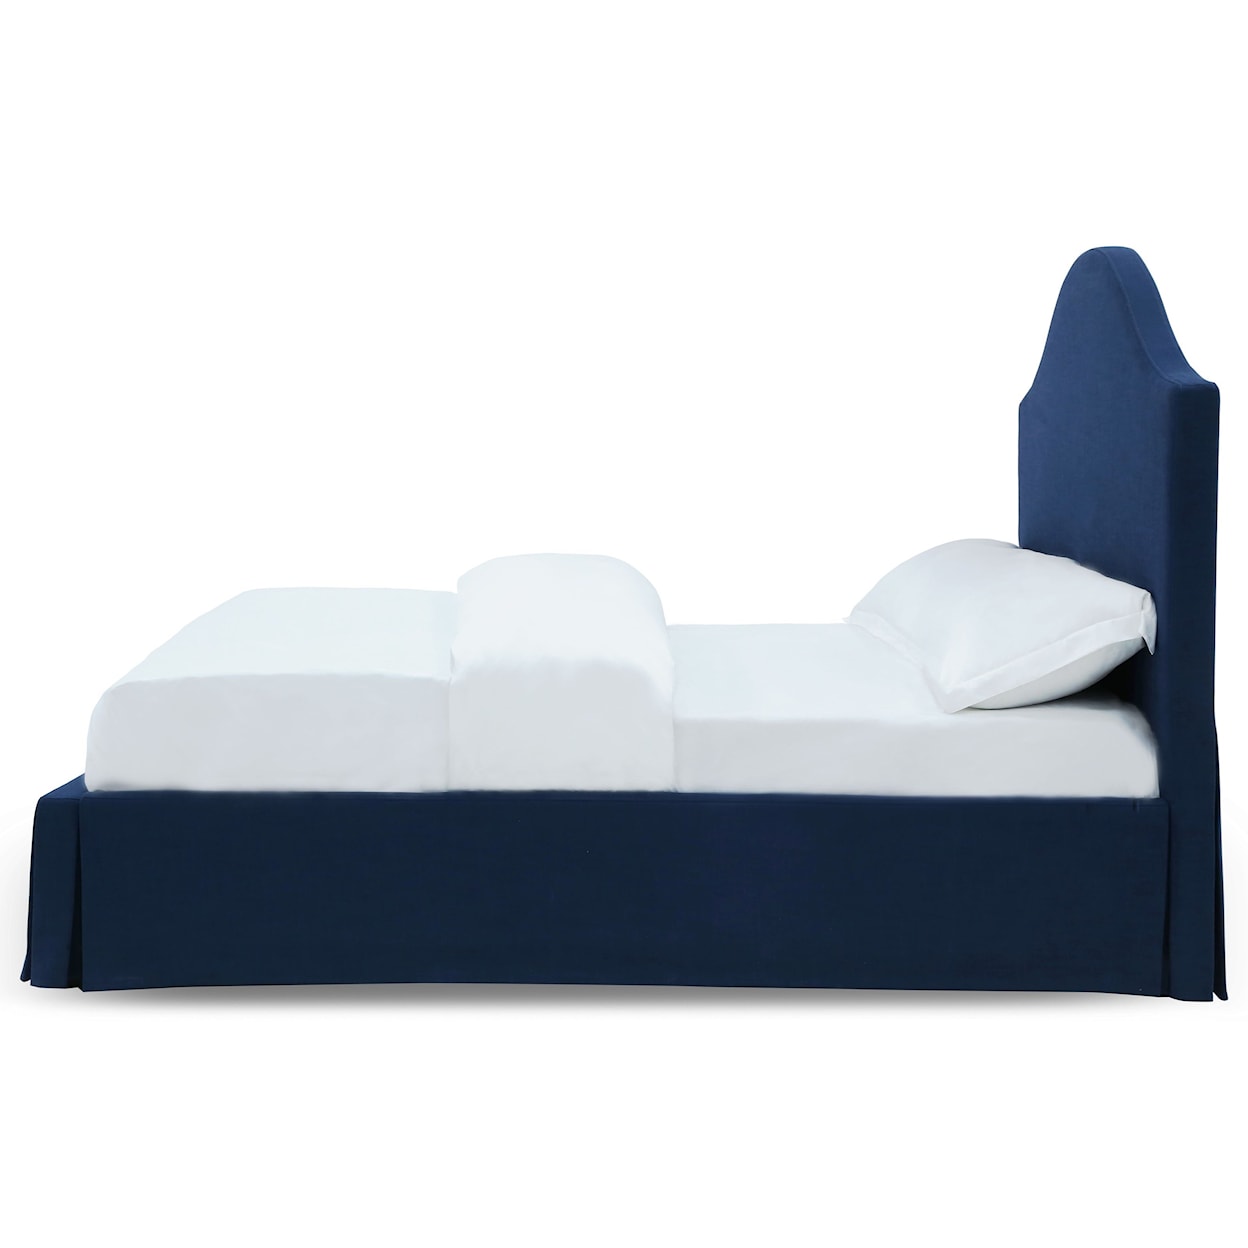 Modus International Juliette Sur Queen Upholstered Skirted Storage Bed